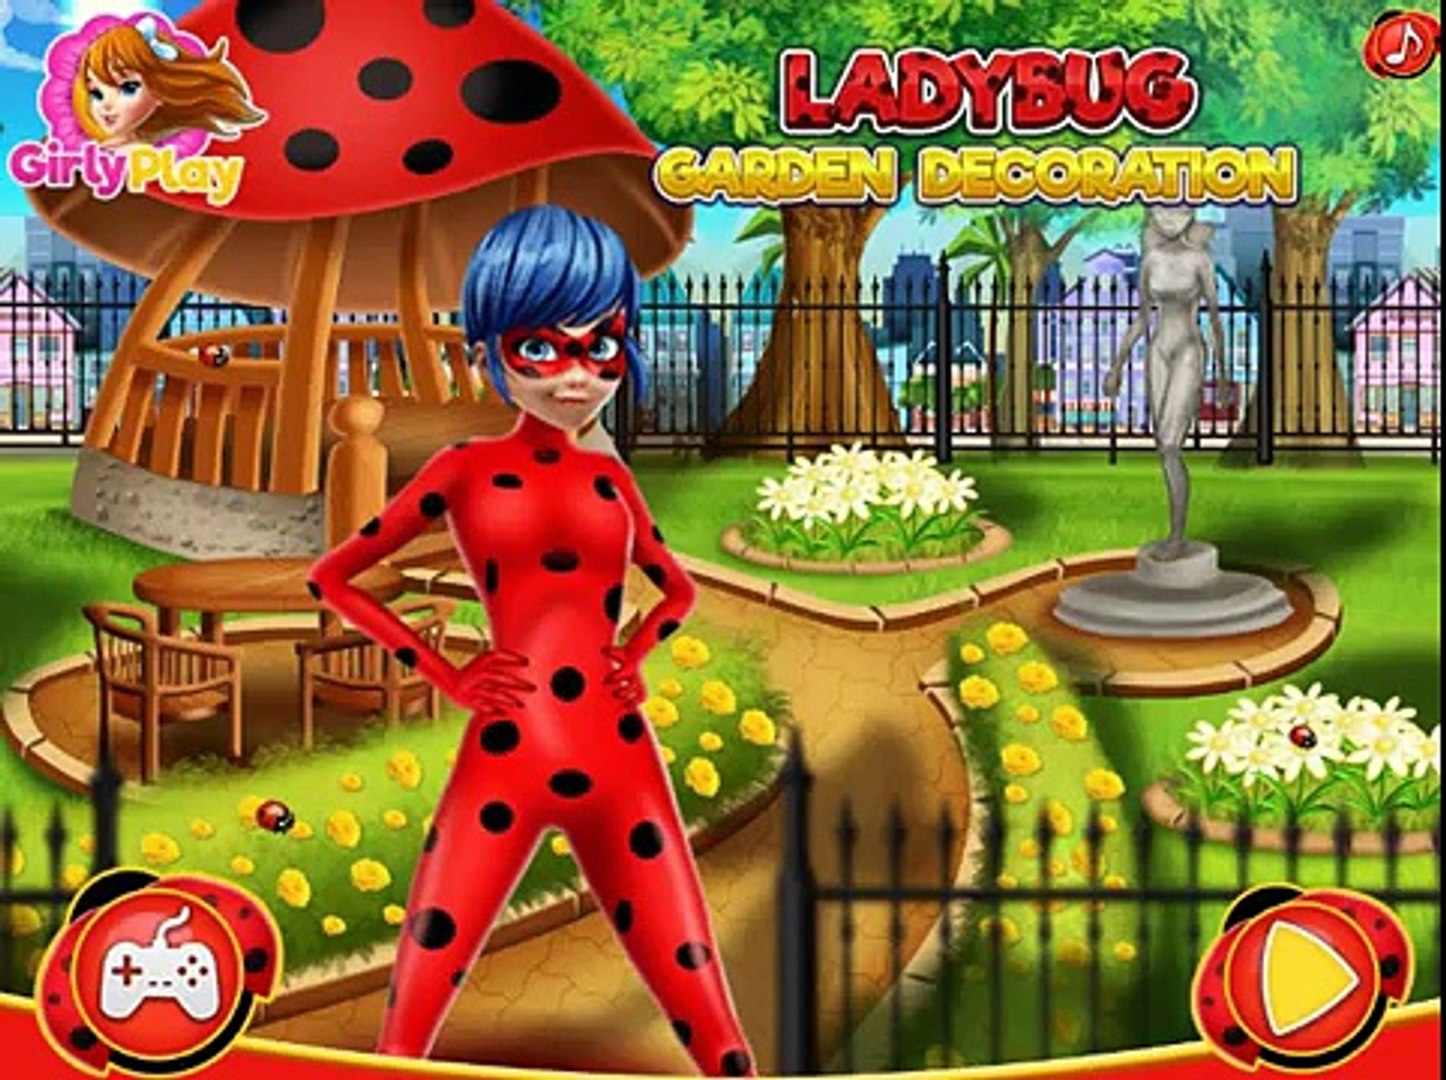 Miraculous Ladybug Free Online Games For Girls-Ladybug Garden Decoration